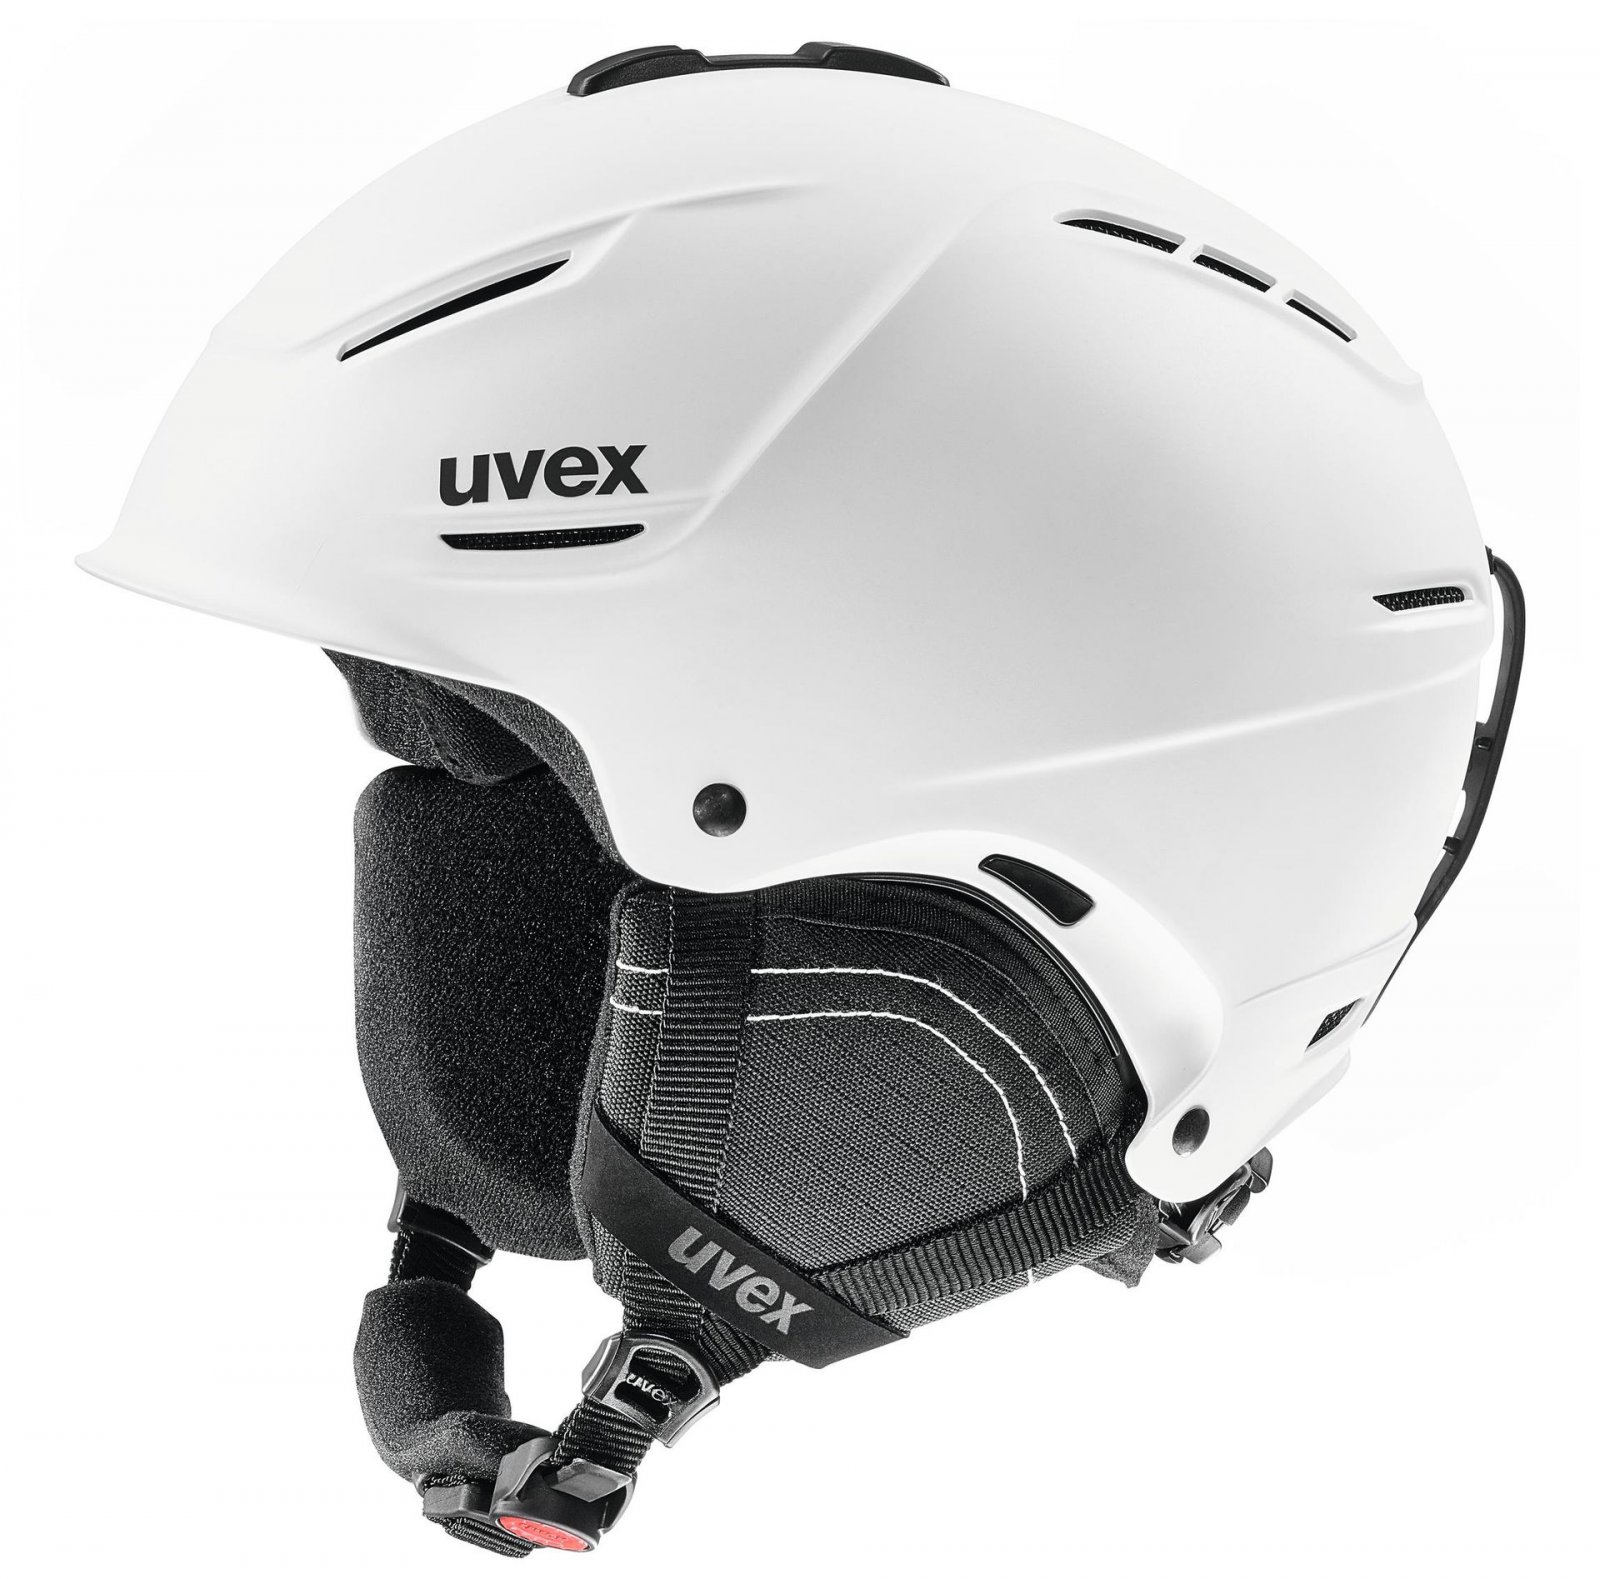 Aardrijkskunde begin Lot Ski helmet UVEX plus 2.0 19/20 | Sportheaters.com